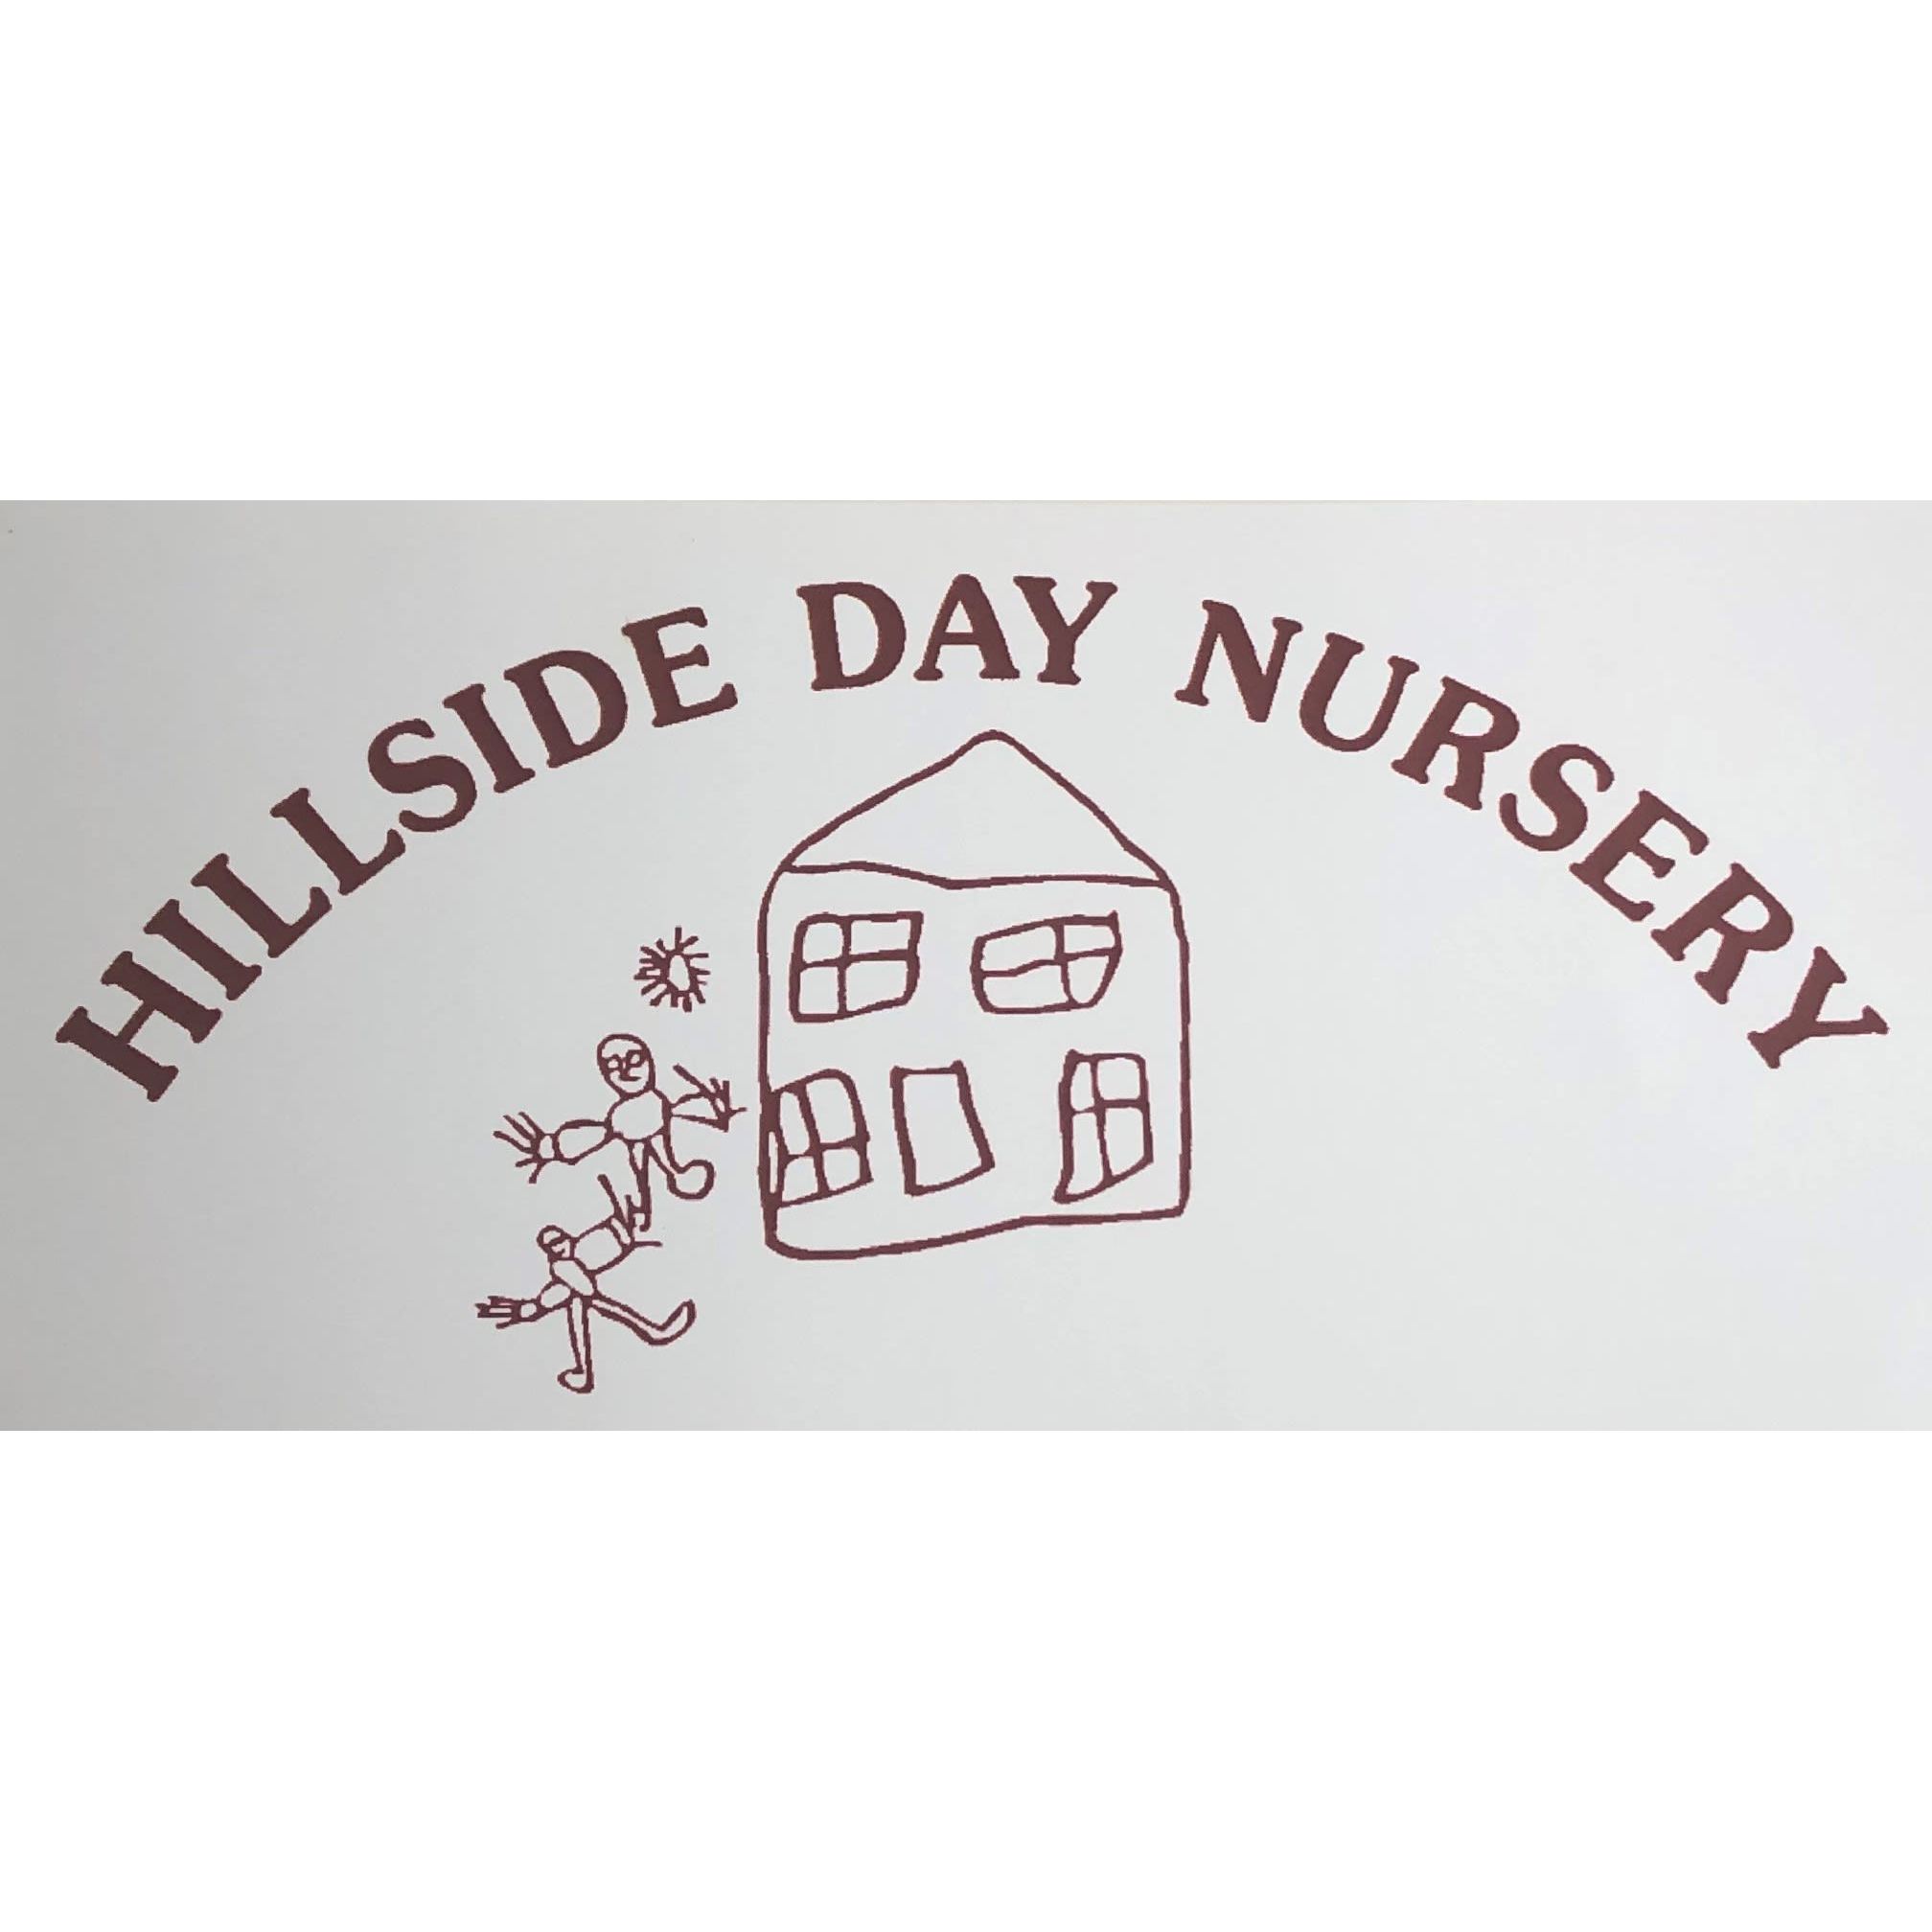 Hillside Day Nursery Ltd - Foundation Site Logo